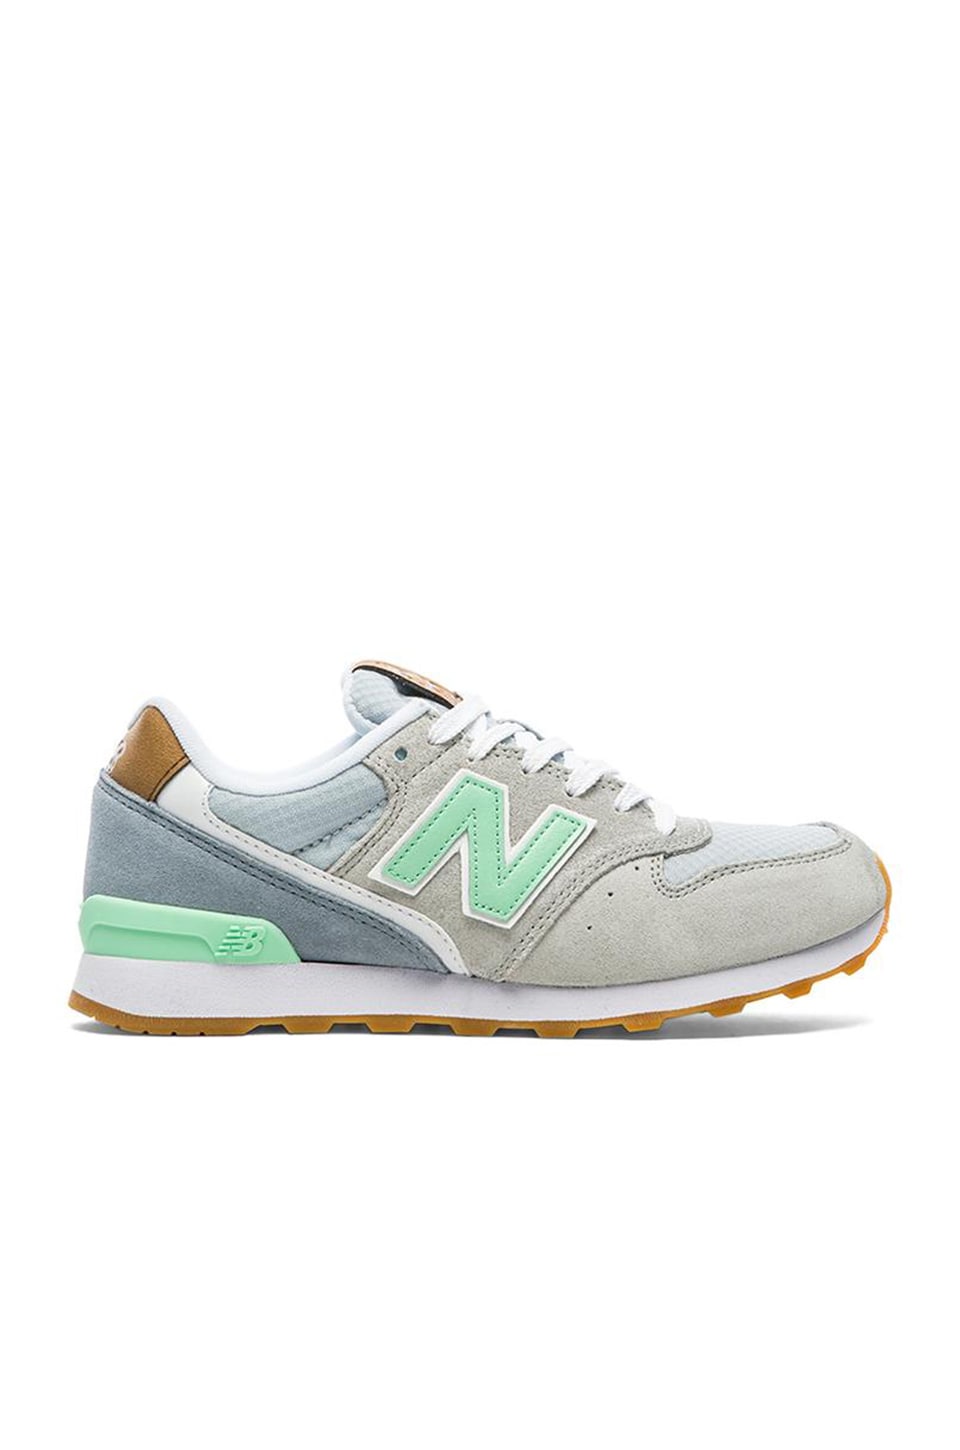 New Balance 696 Sneaker in Grey \u0026 Green